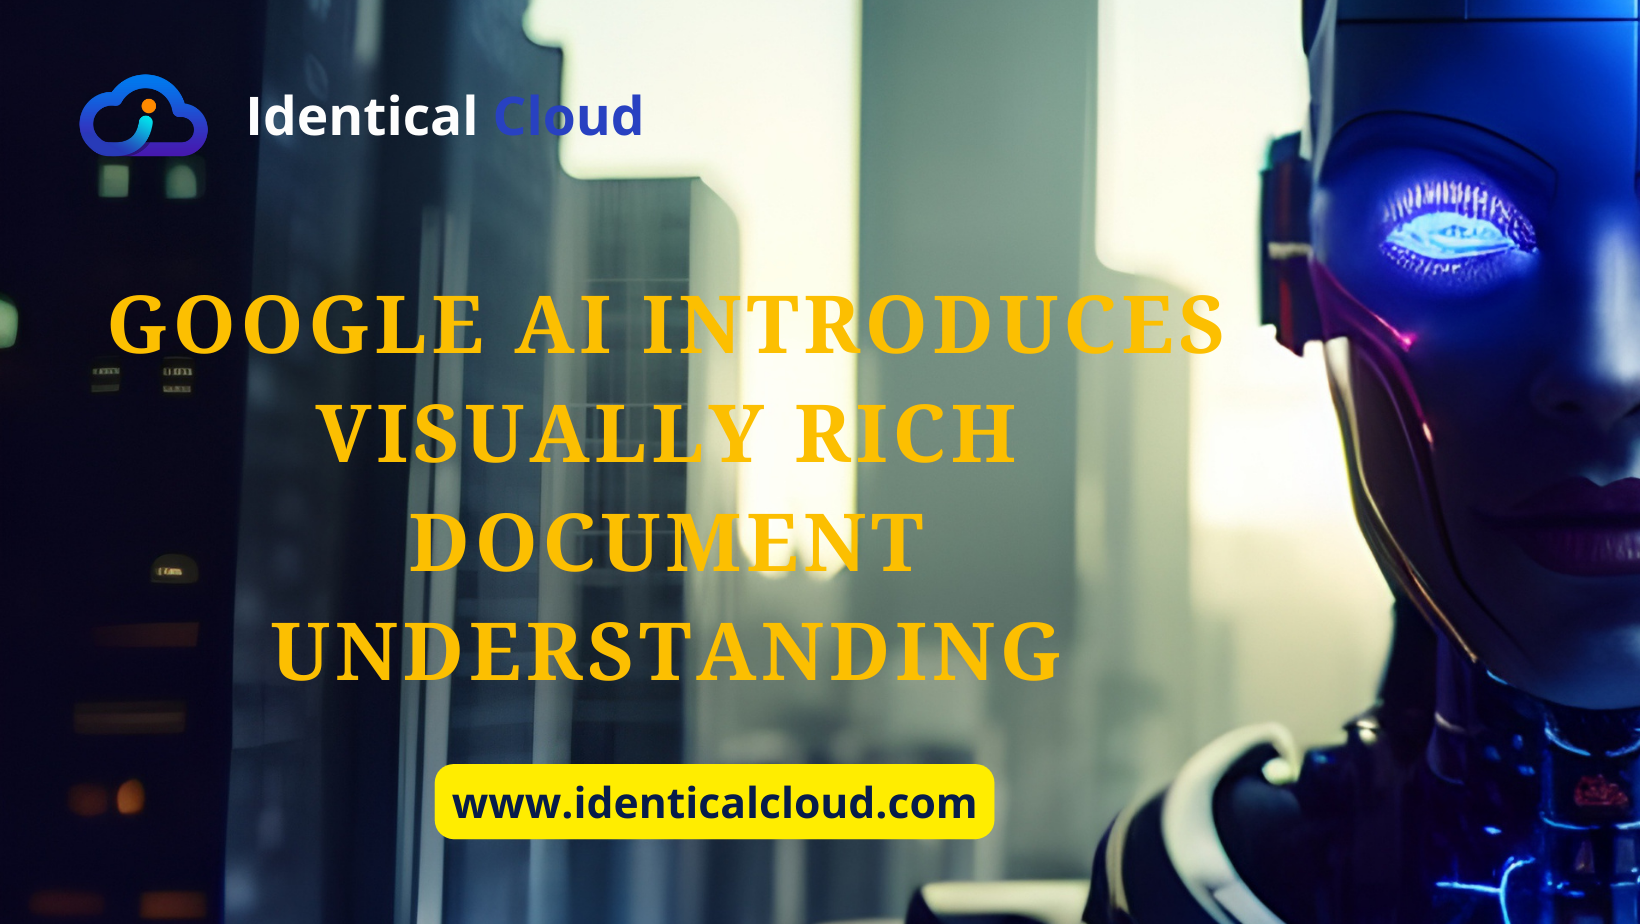 Google AI Introduces Visually Rich Document Understanding - identicalcloud.com